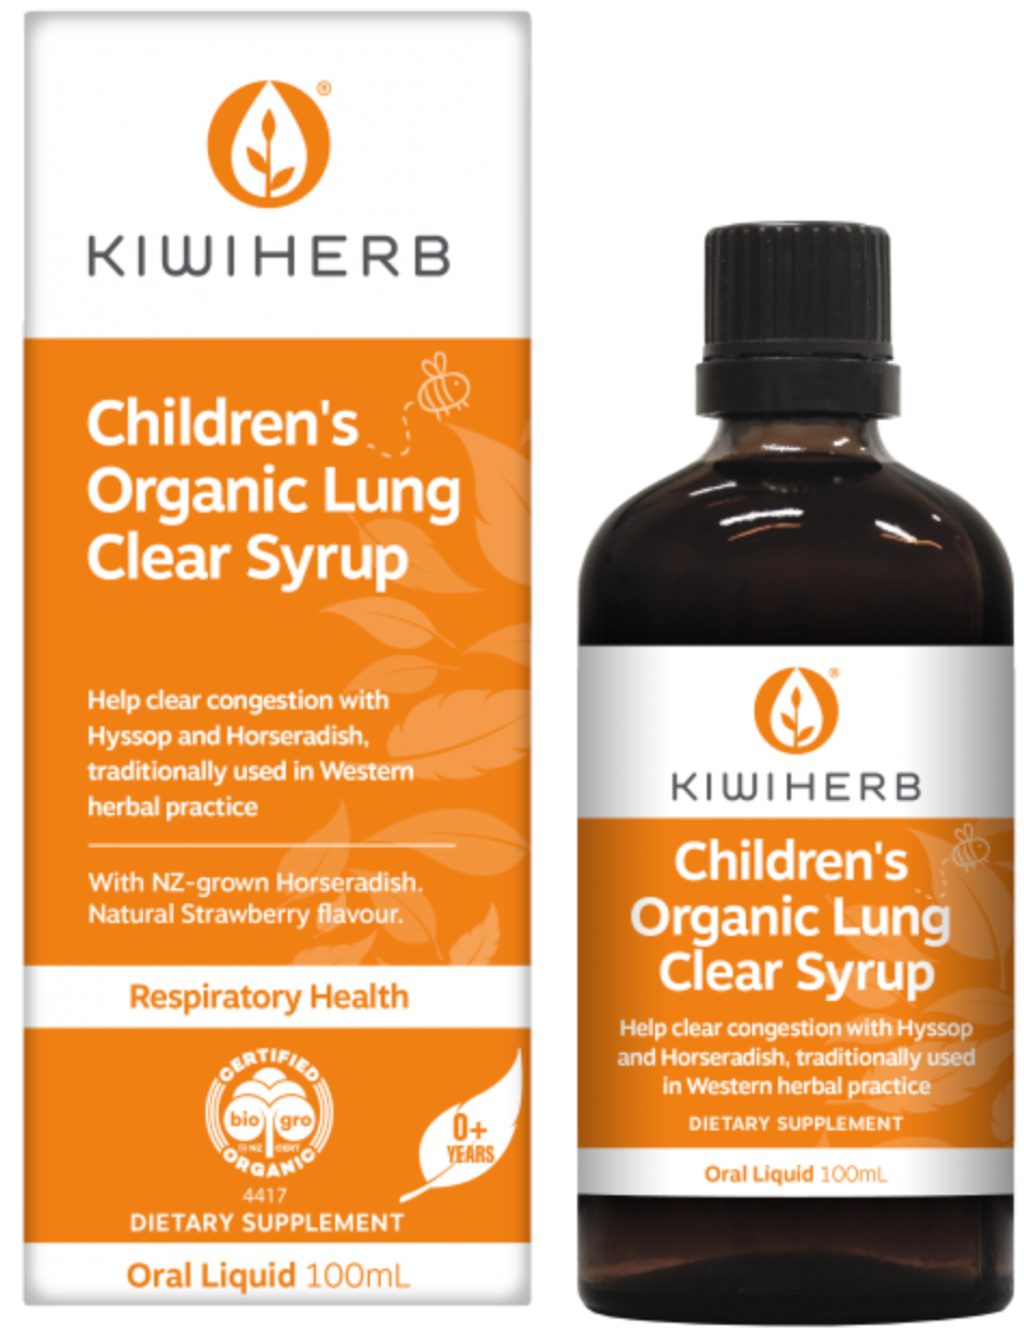 Kiwiherb Children’s Organic Lung Clear Syrup 兒童清肺糖漿